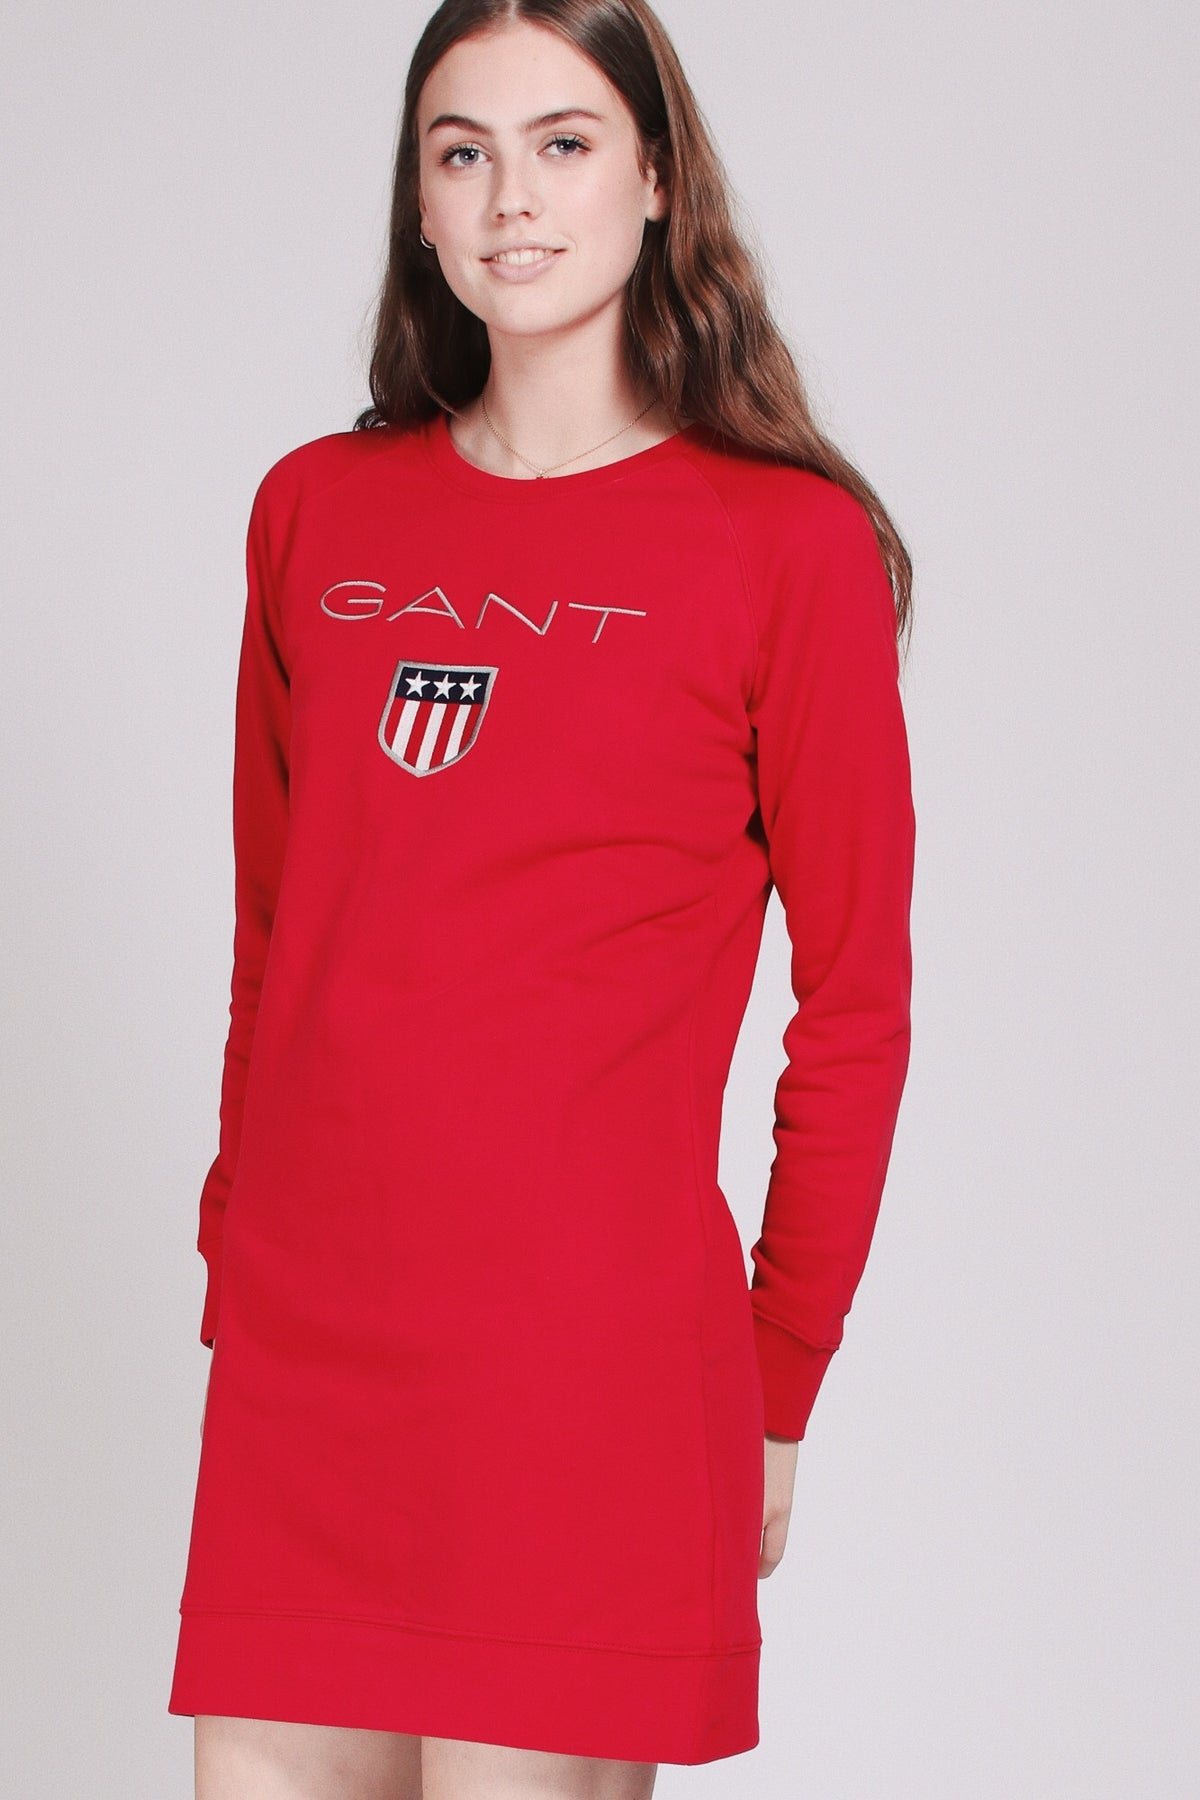 Gant Shield Logo C-neck Dress - Red - GANT - Kjoler - VILLOID.no